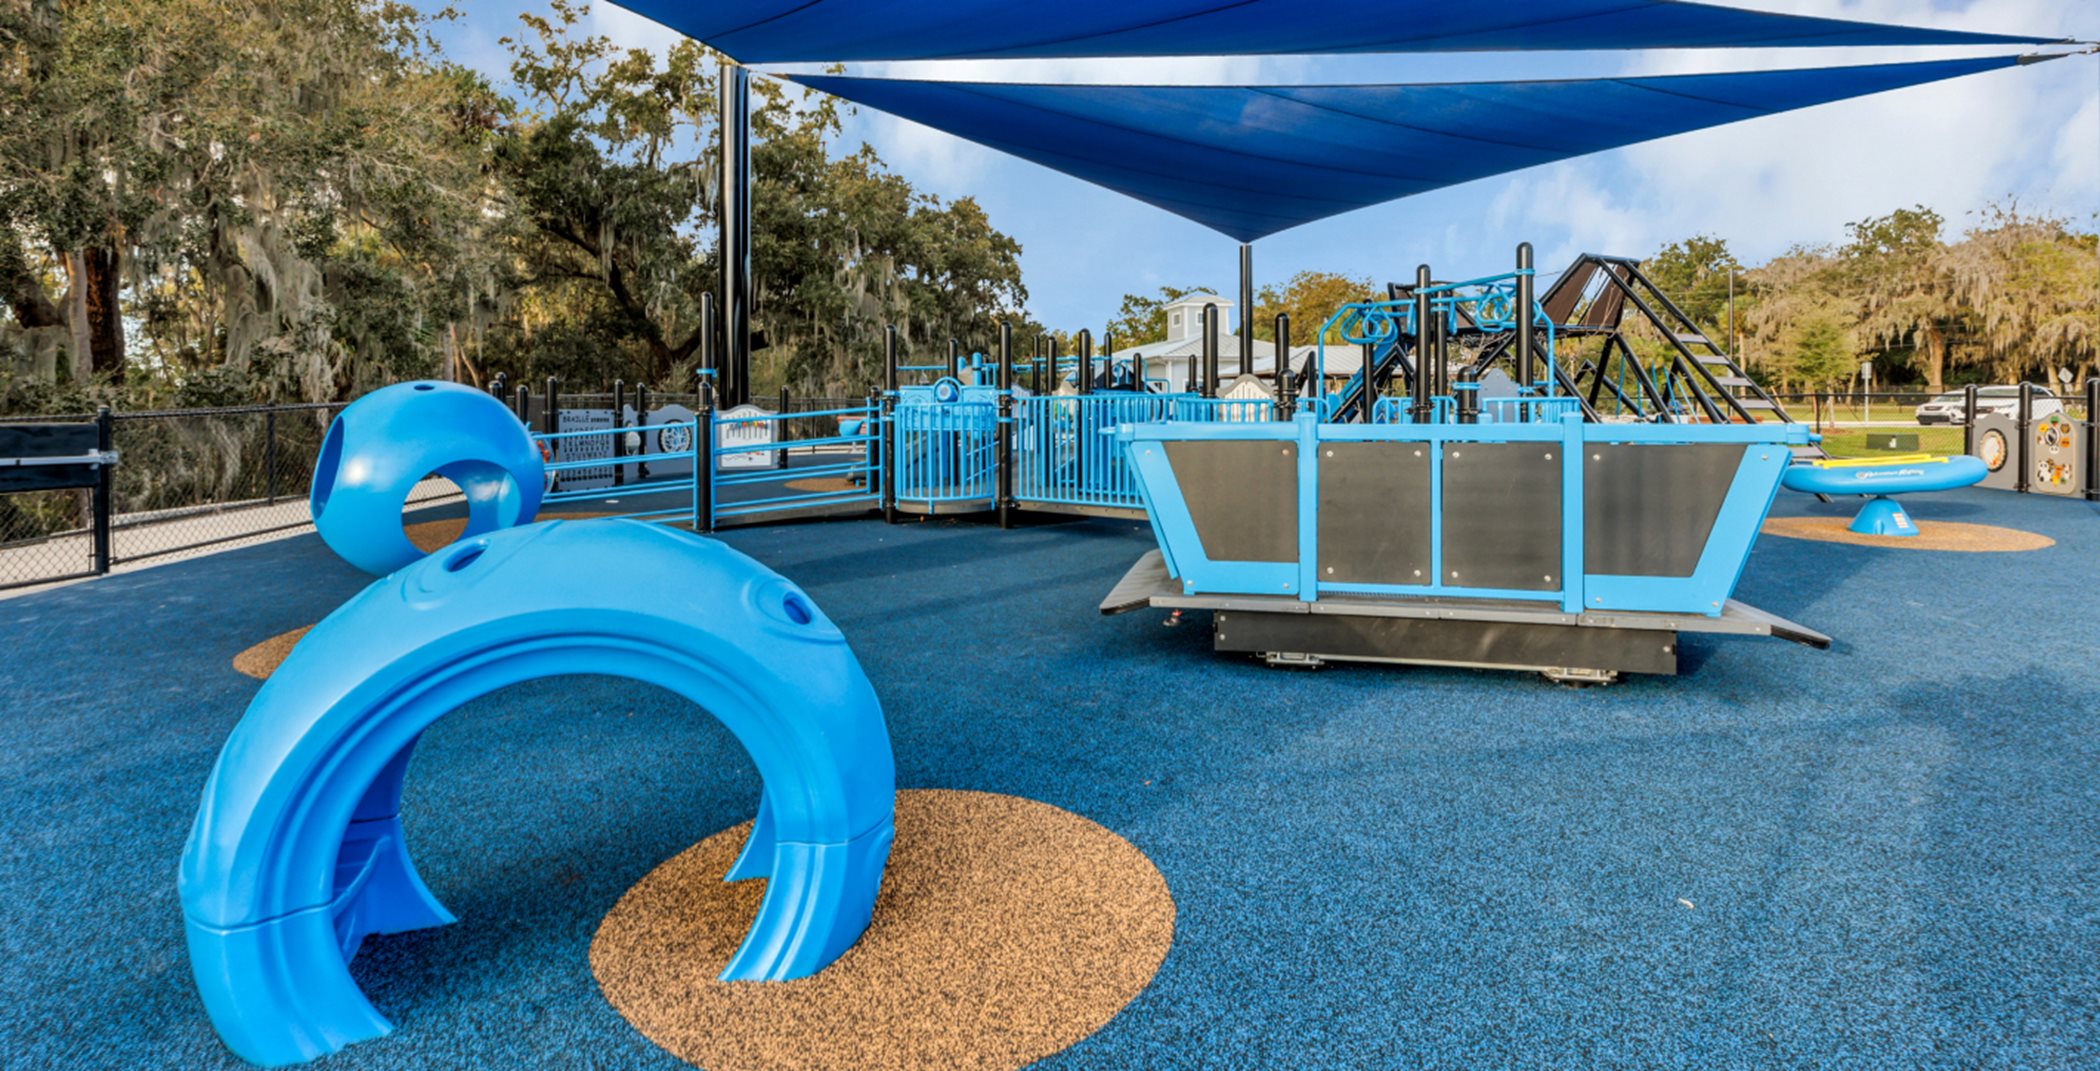 Magnolia Park playground